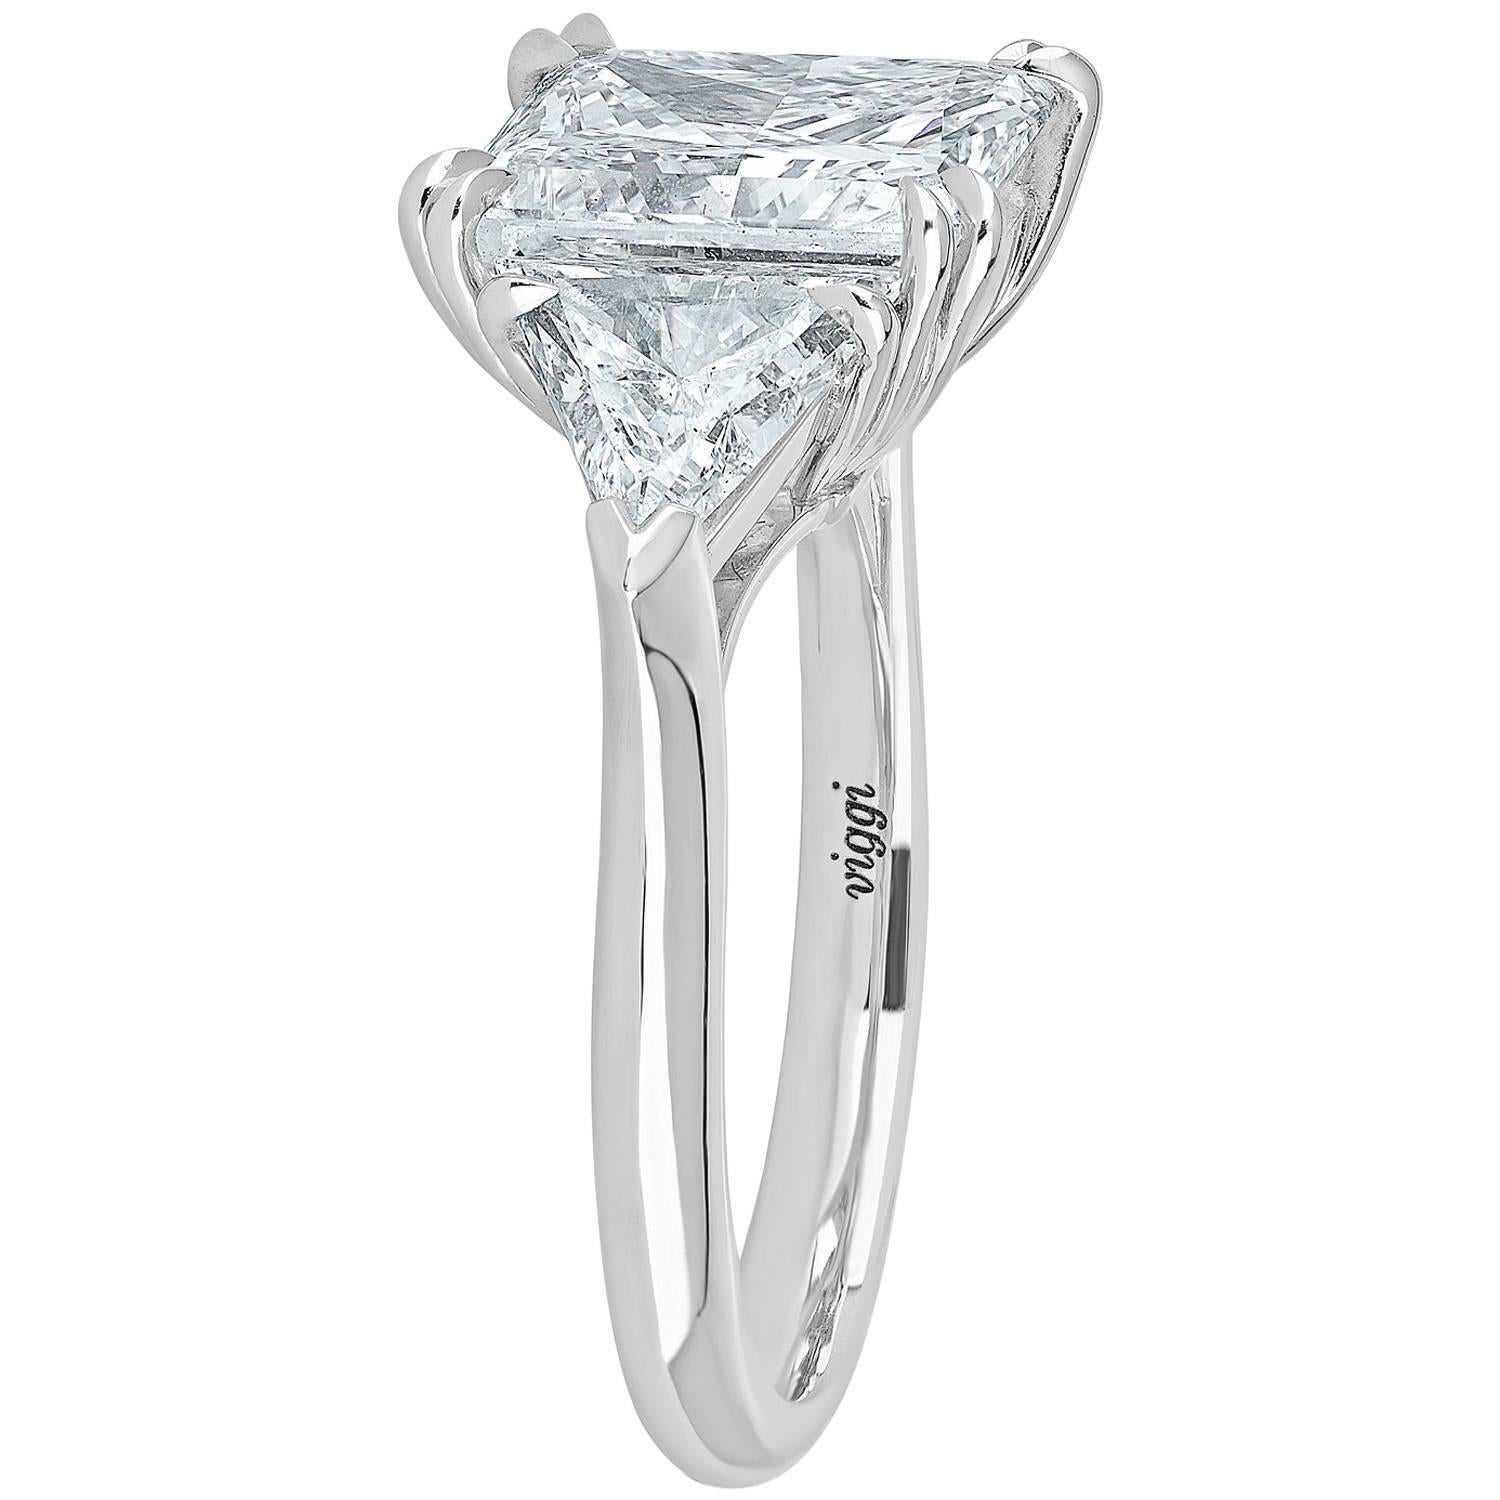 Platinum Ring 5.02 Cut Princess Cut Diamond D Color and Trillion Cut Diamonds